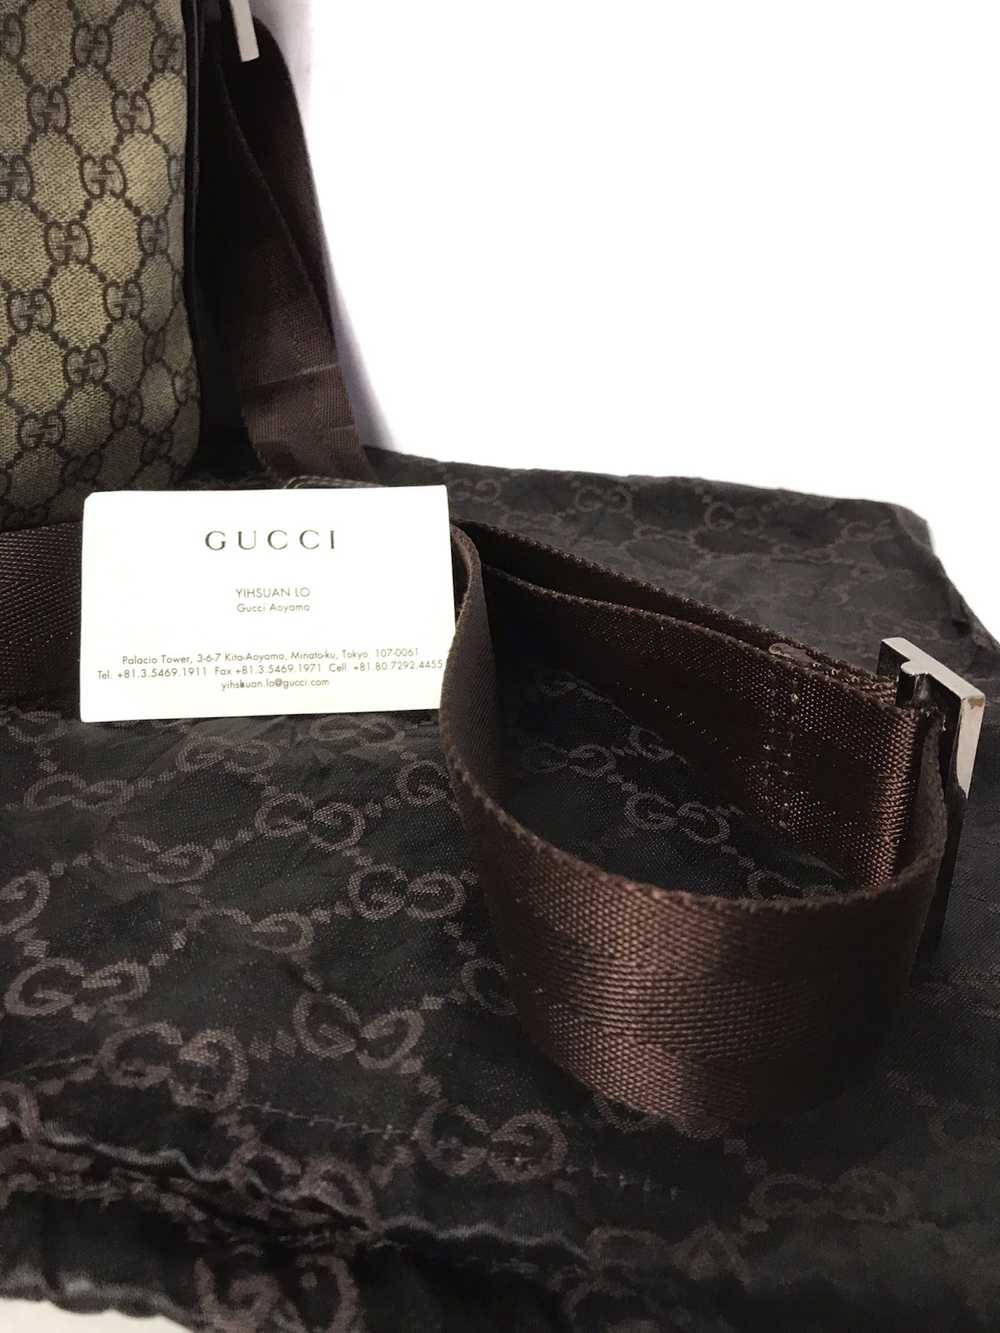 Authentic × Gucci Best Offer Authentic GUCCI Shou… - image 11